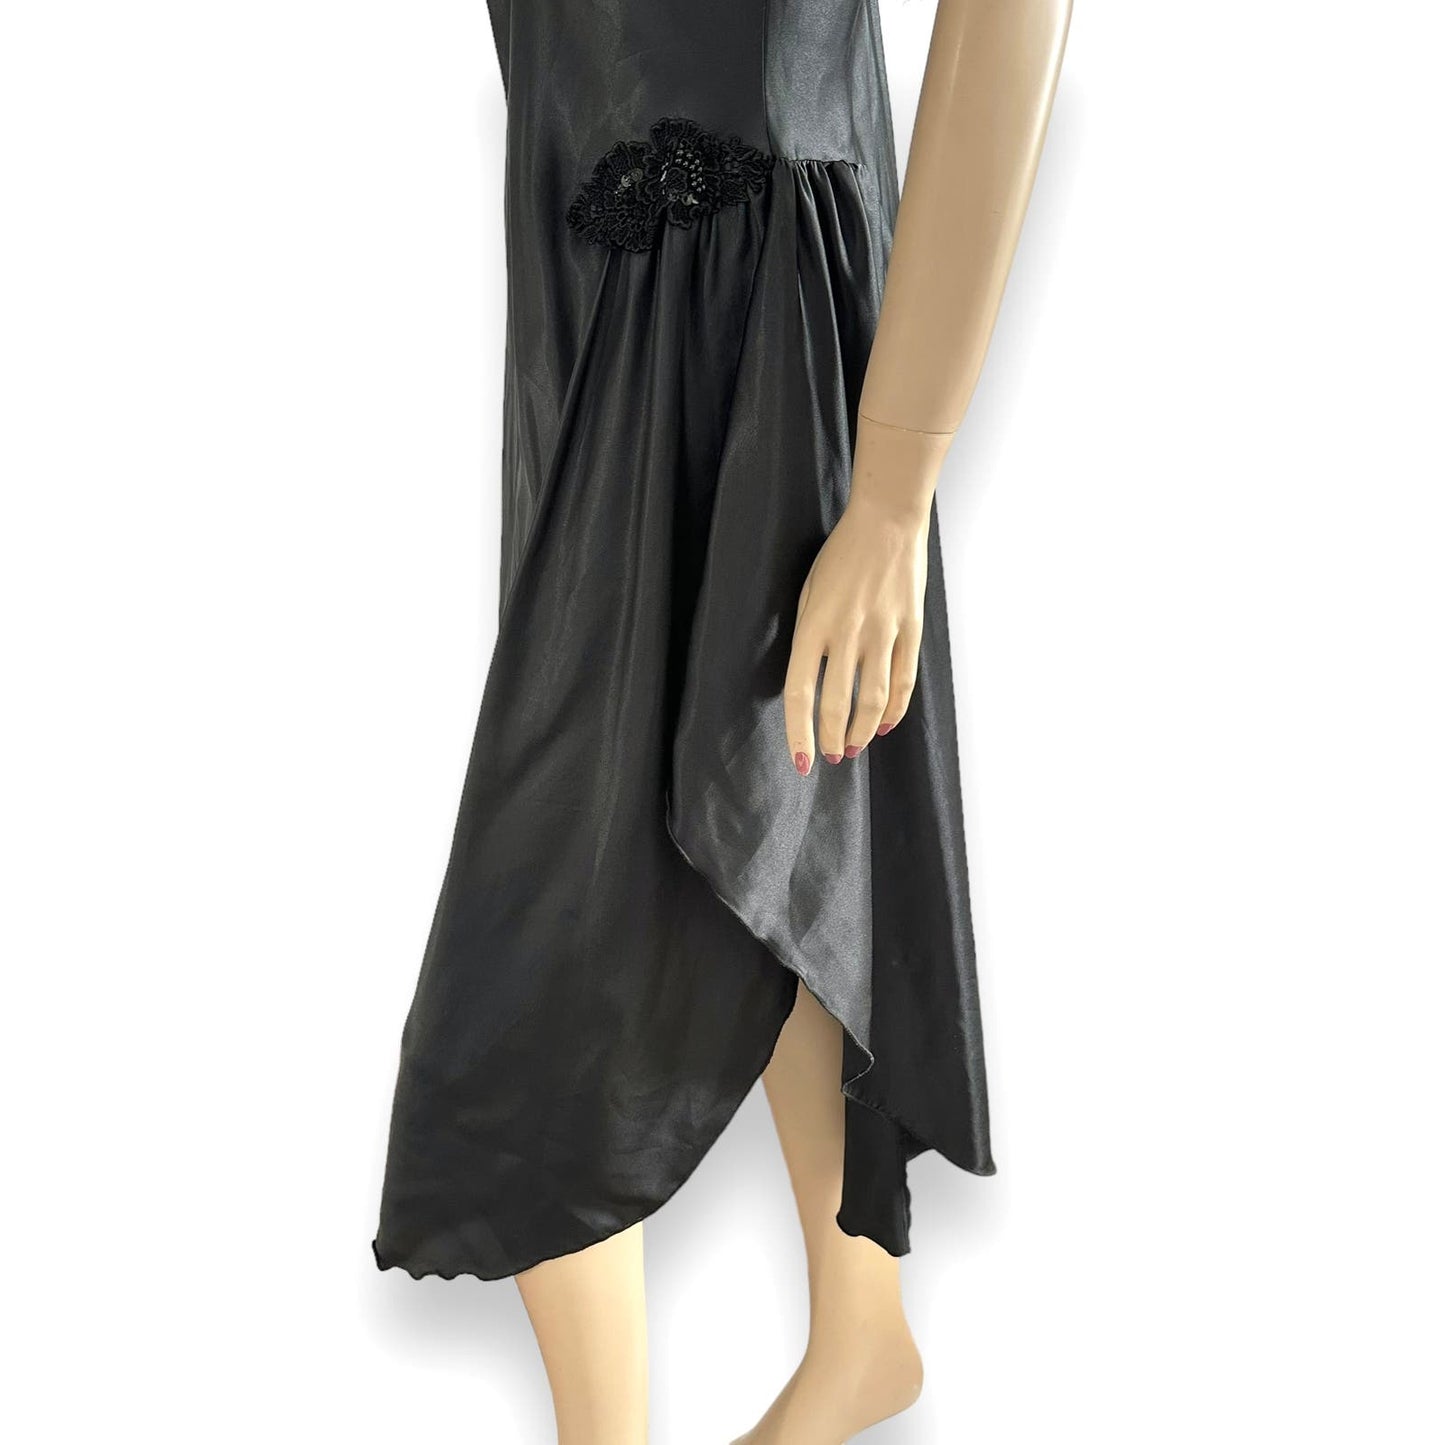 Vintage 80s Black Satin Night Dress Nightgown Size M